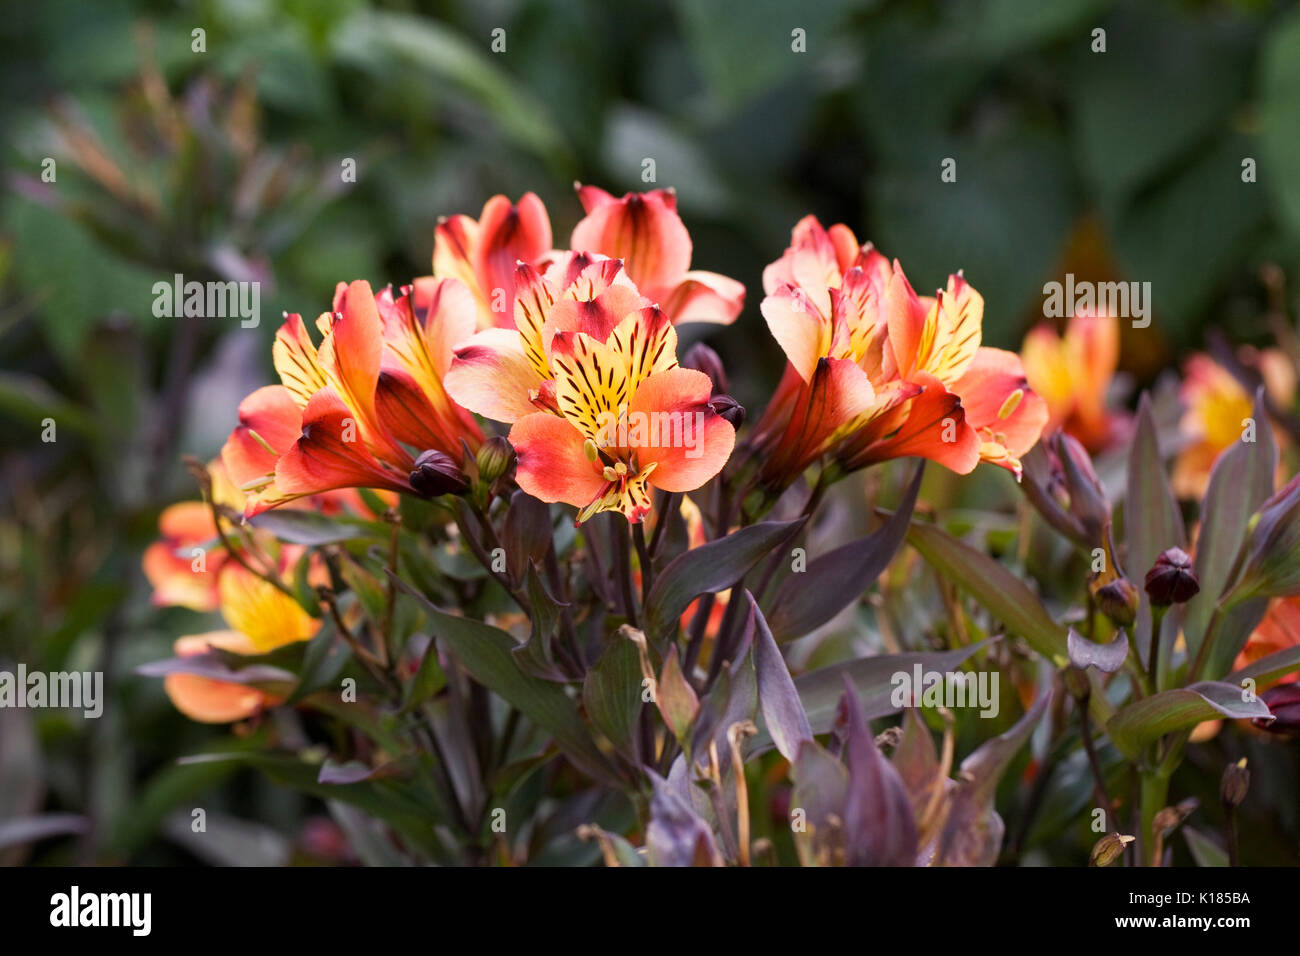 Alstroemeria Indian Summer 'Tesronto' flowers in the garden. Stock Photo